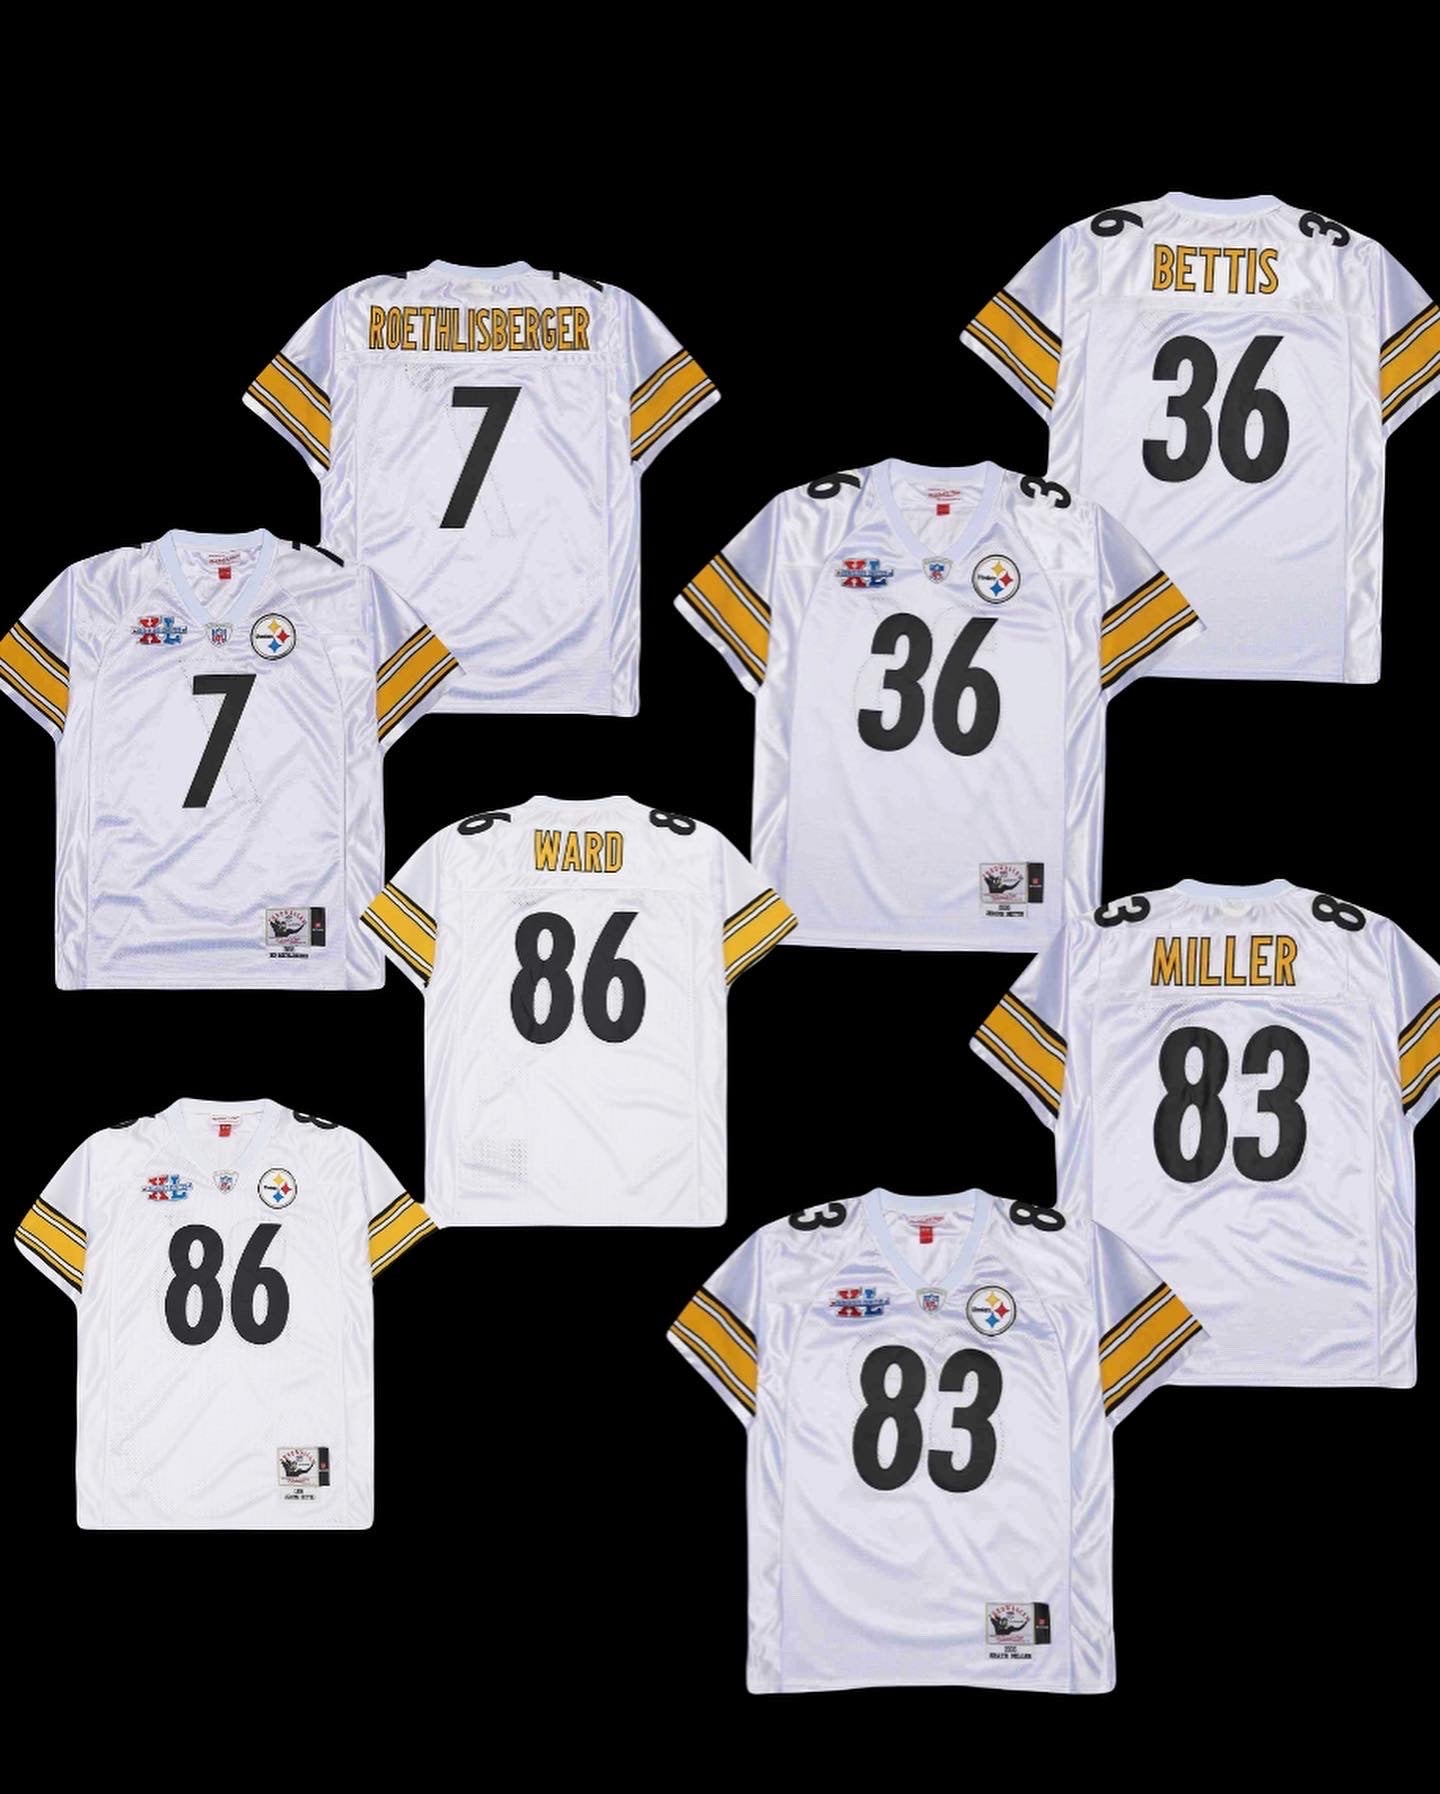 Ben Roethlisberger Pittsburgh Steelers Super Bowl XL NFL Jersey - White